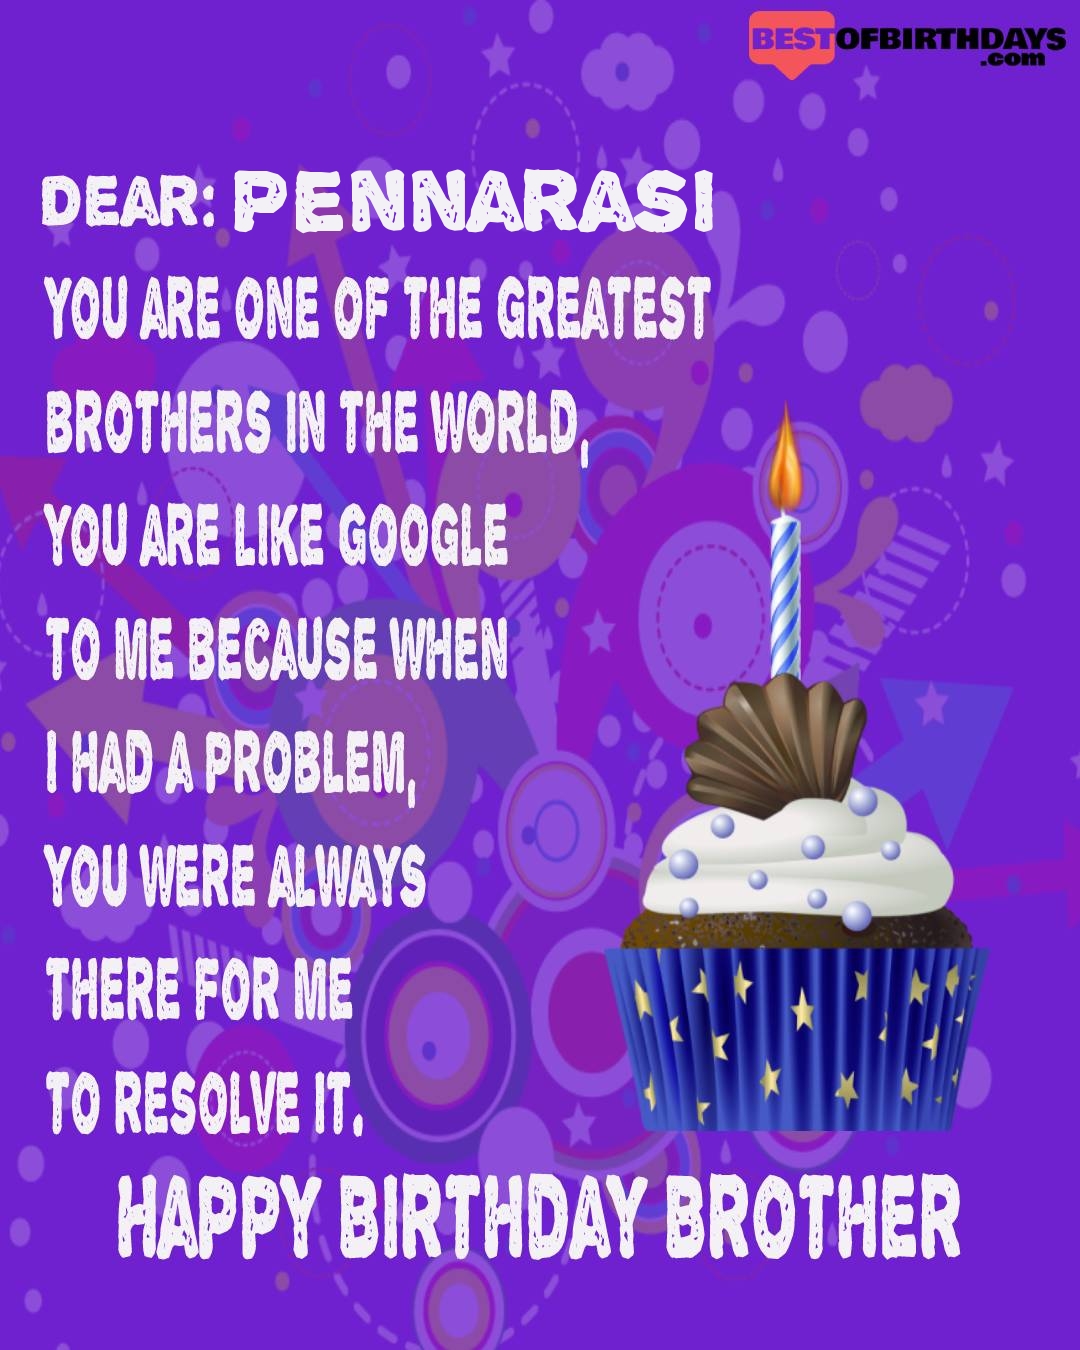 Happy birthday pennarasi bhai brother bro